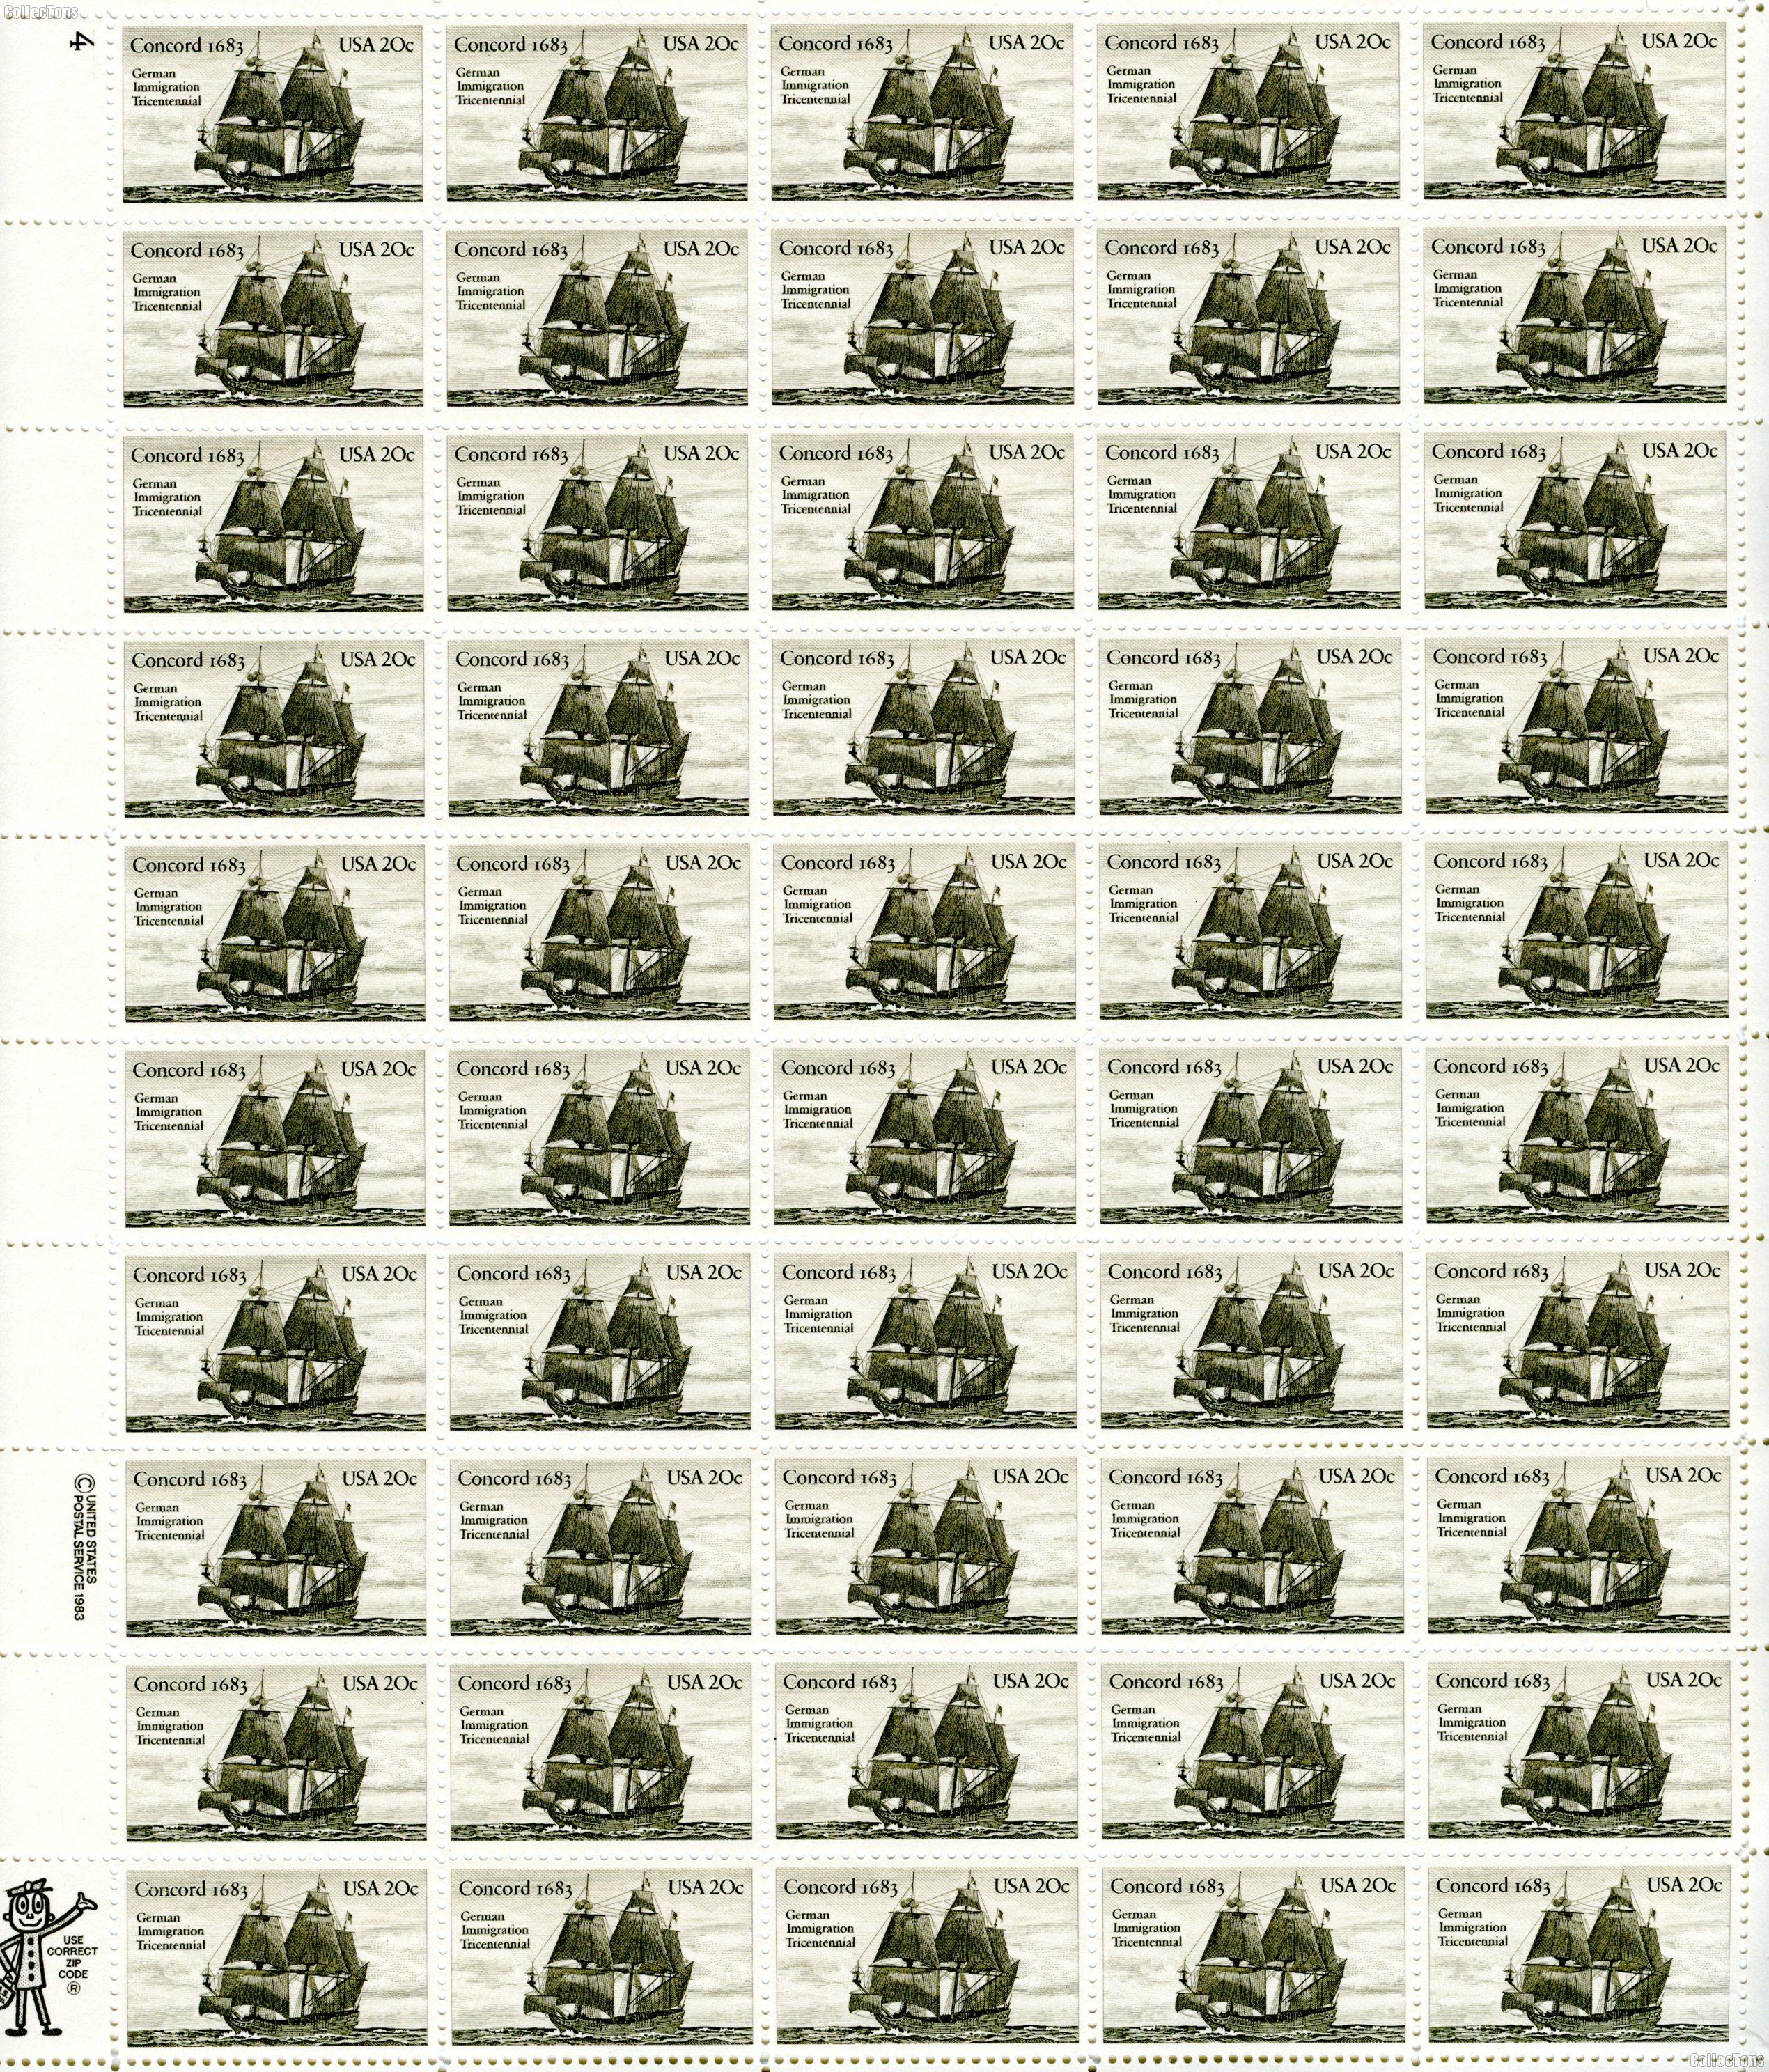 1983 German Immigration 20 Cent US Postage Stamp MNH Sheet of 50 Scott #2040